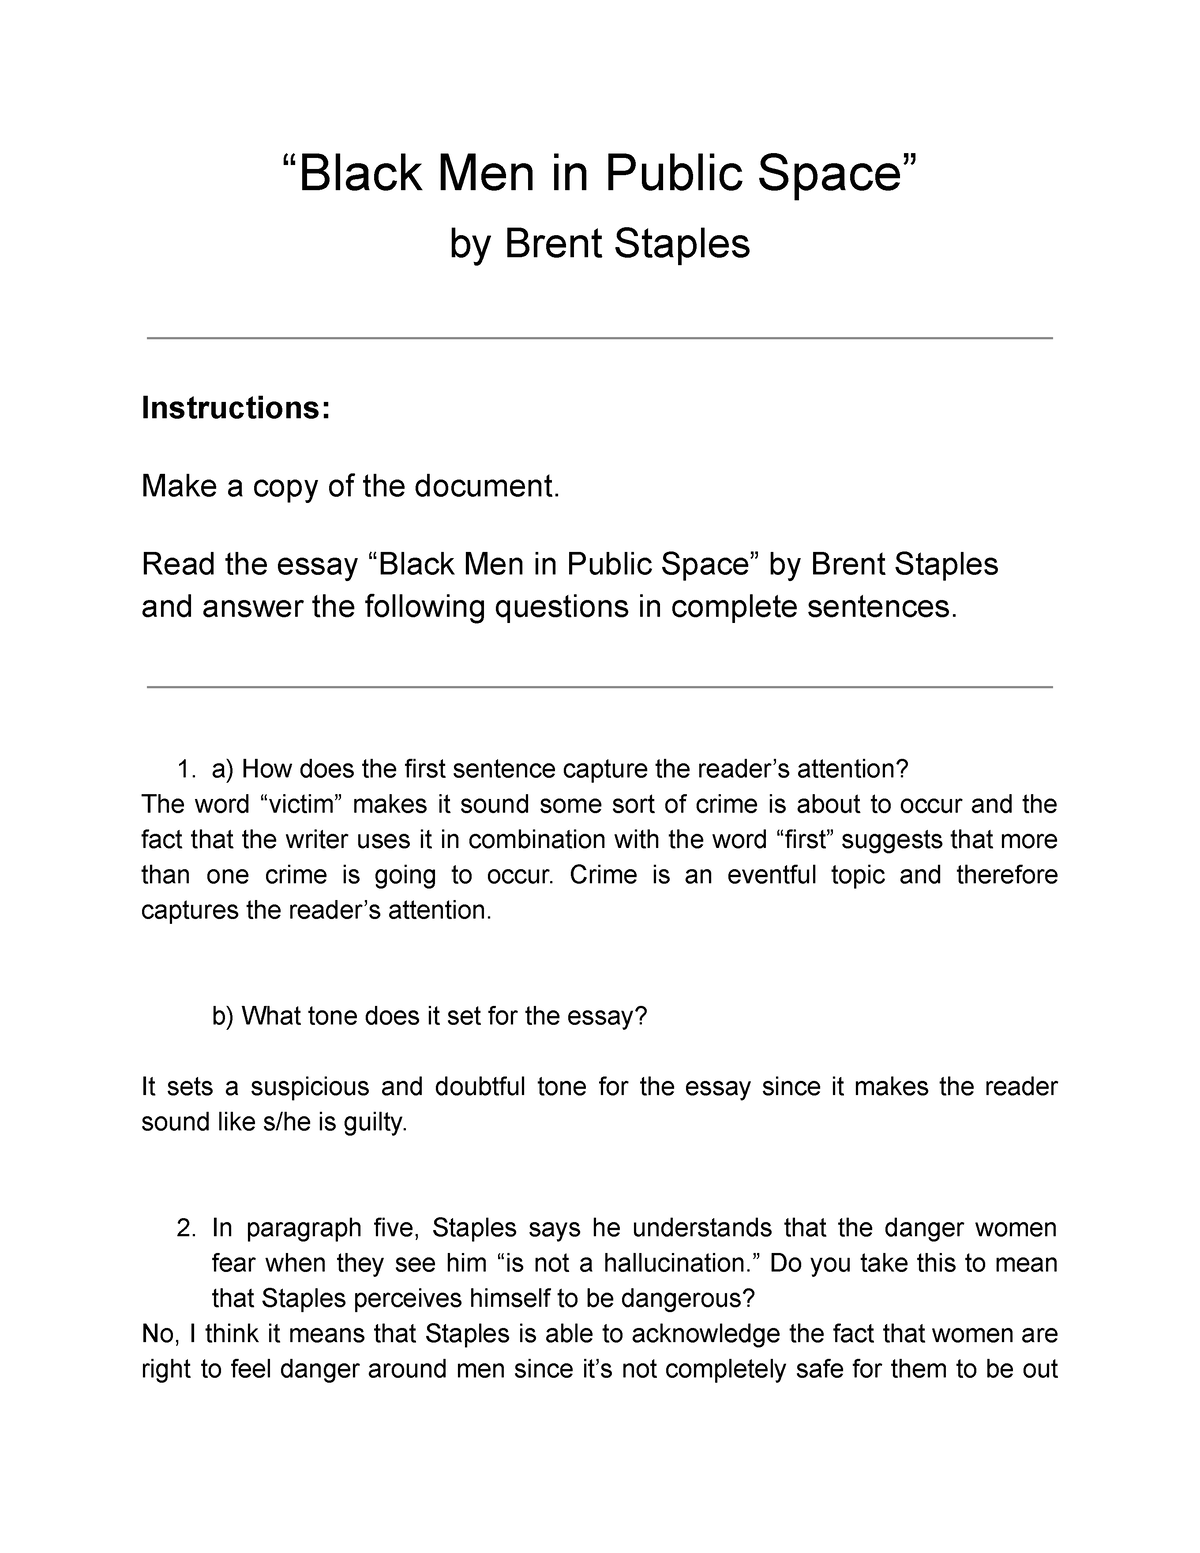 brent staples black men and public space essay